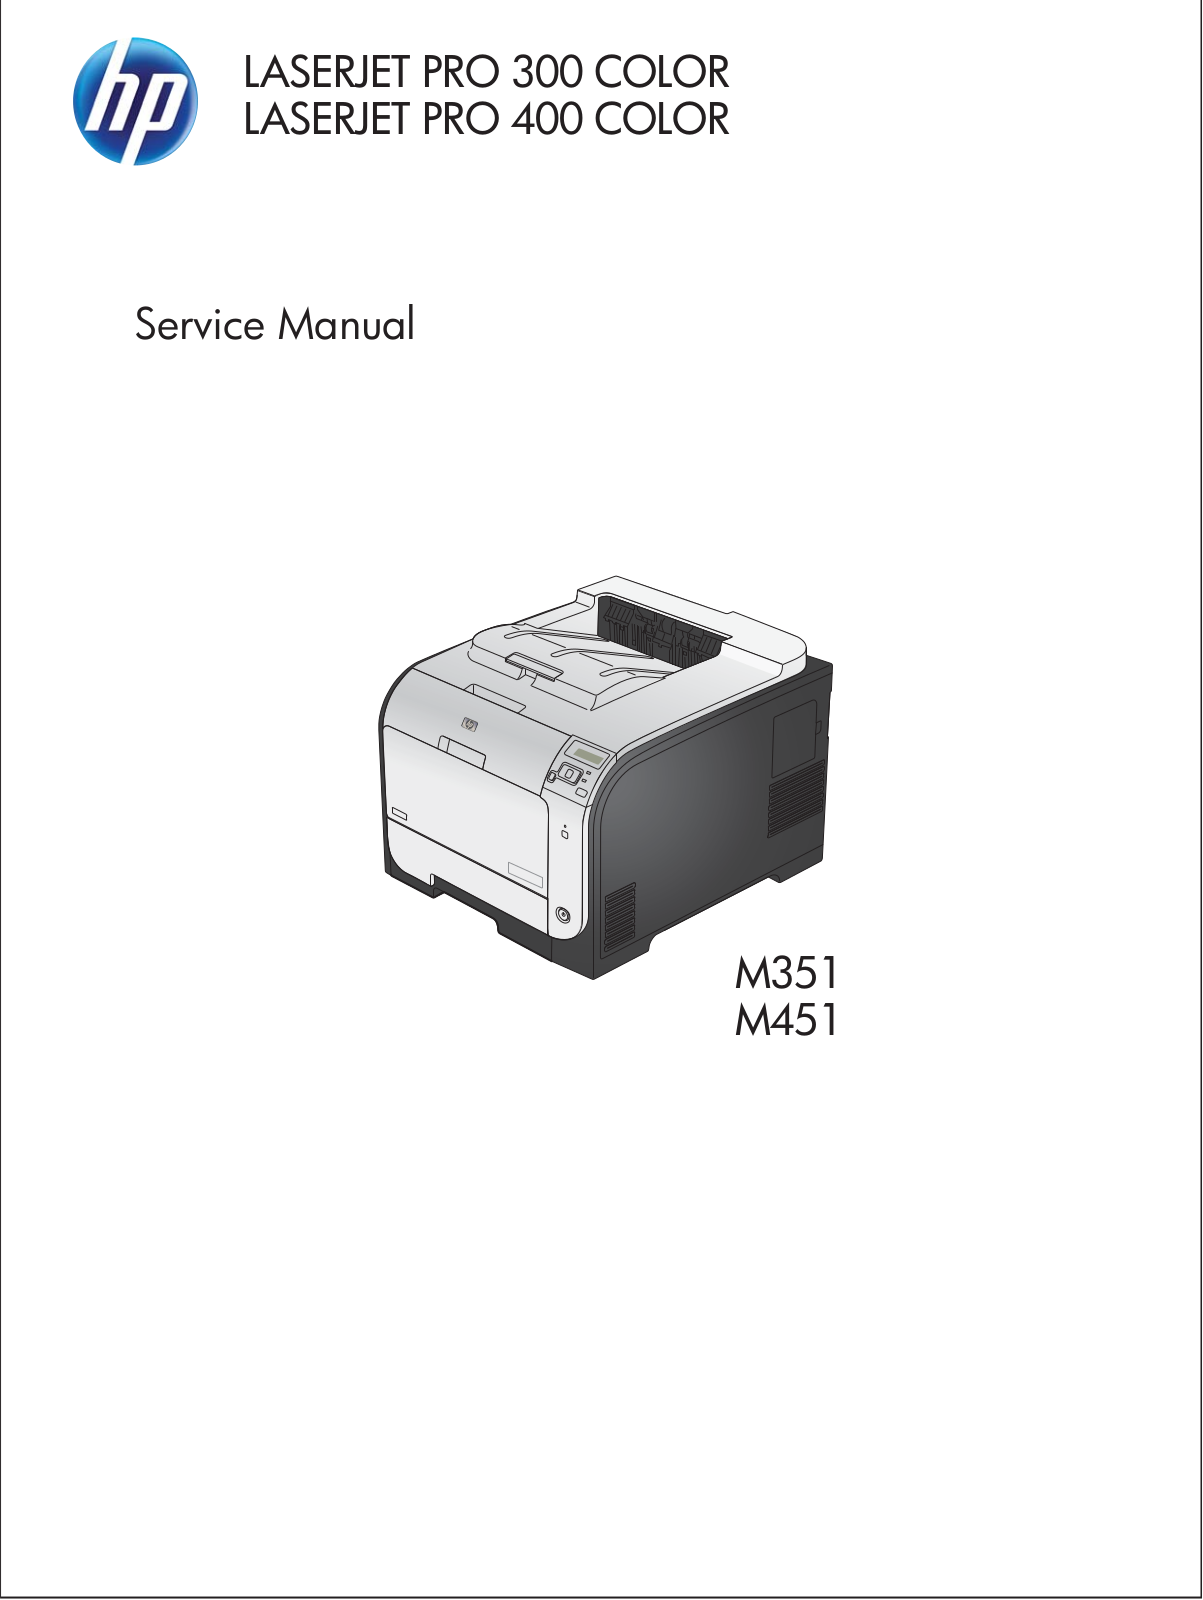 HP LaserJet Pro 300 color M351, LaserJet Pro 400 color M451 Service Manual